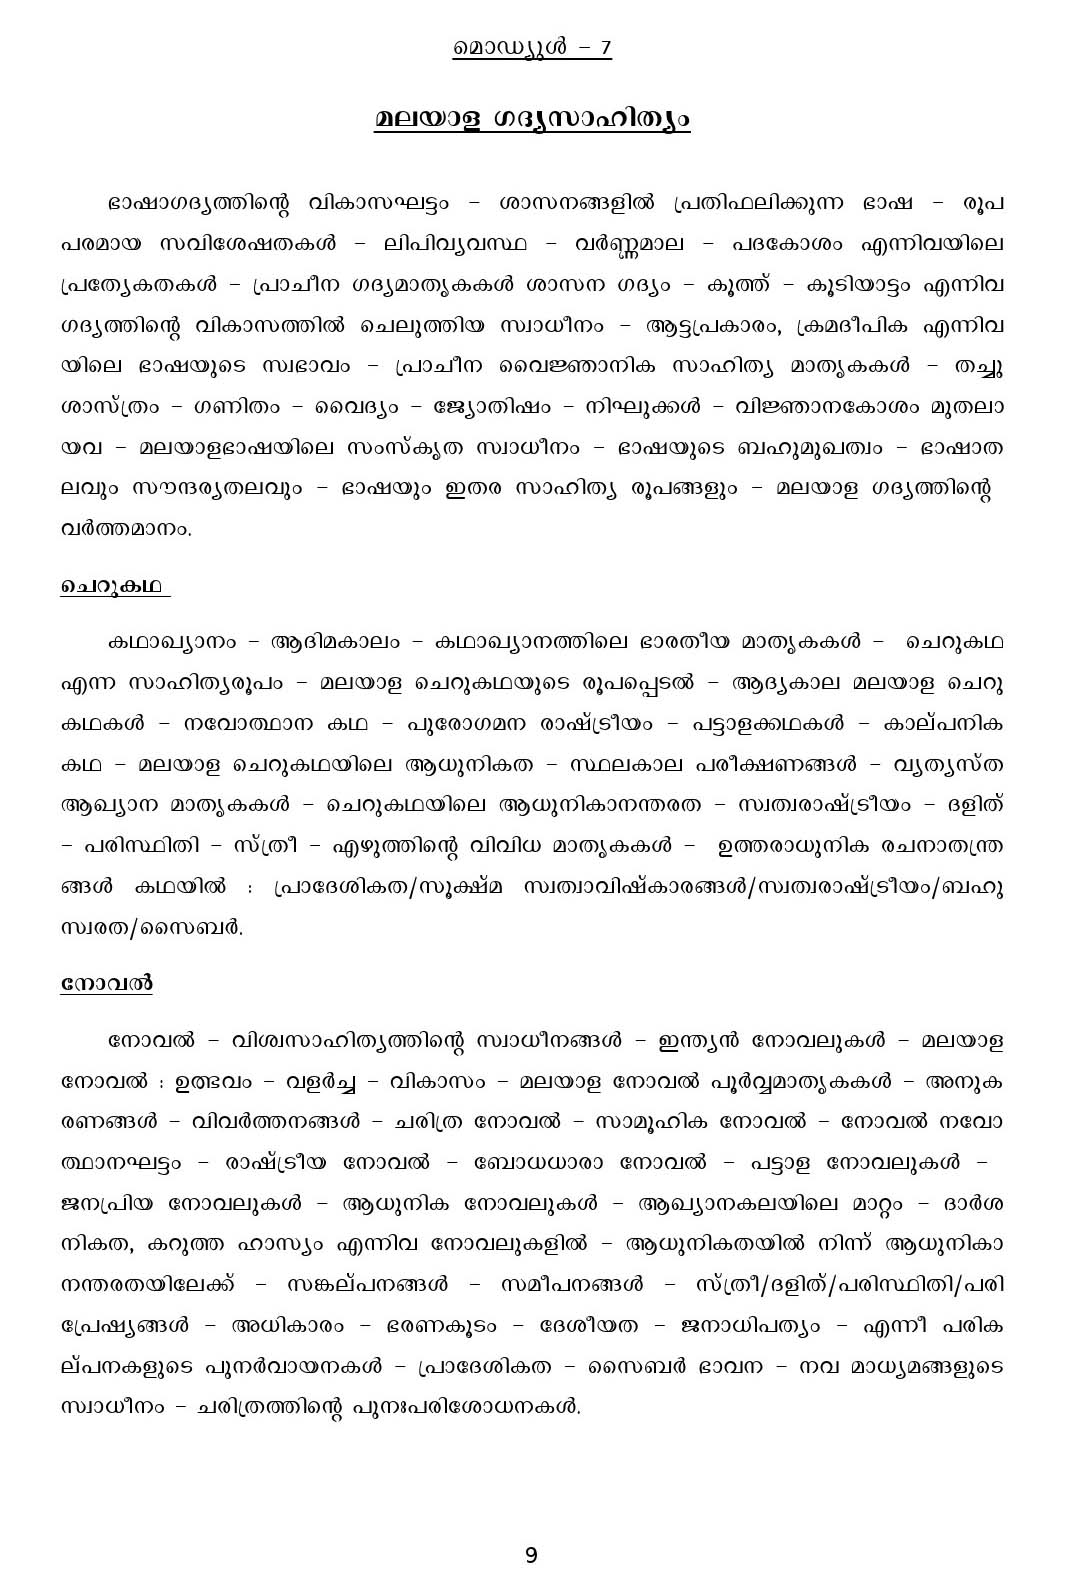 Kerala PSC Assistant Professor Malayalam Exam Syllabus - Notification Image 9